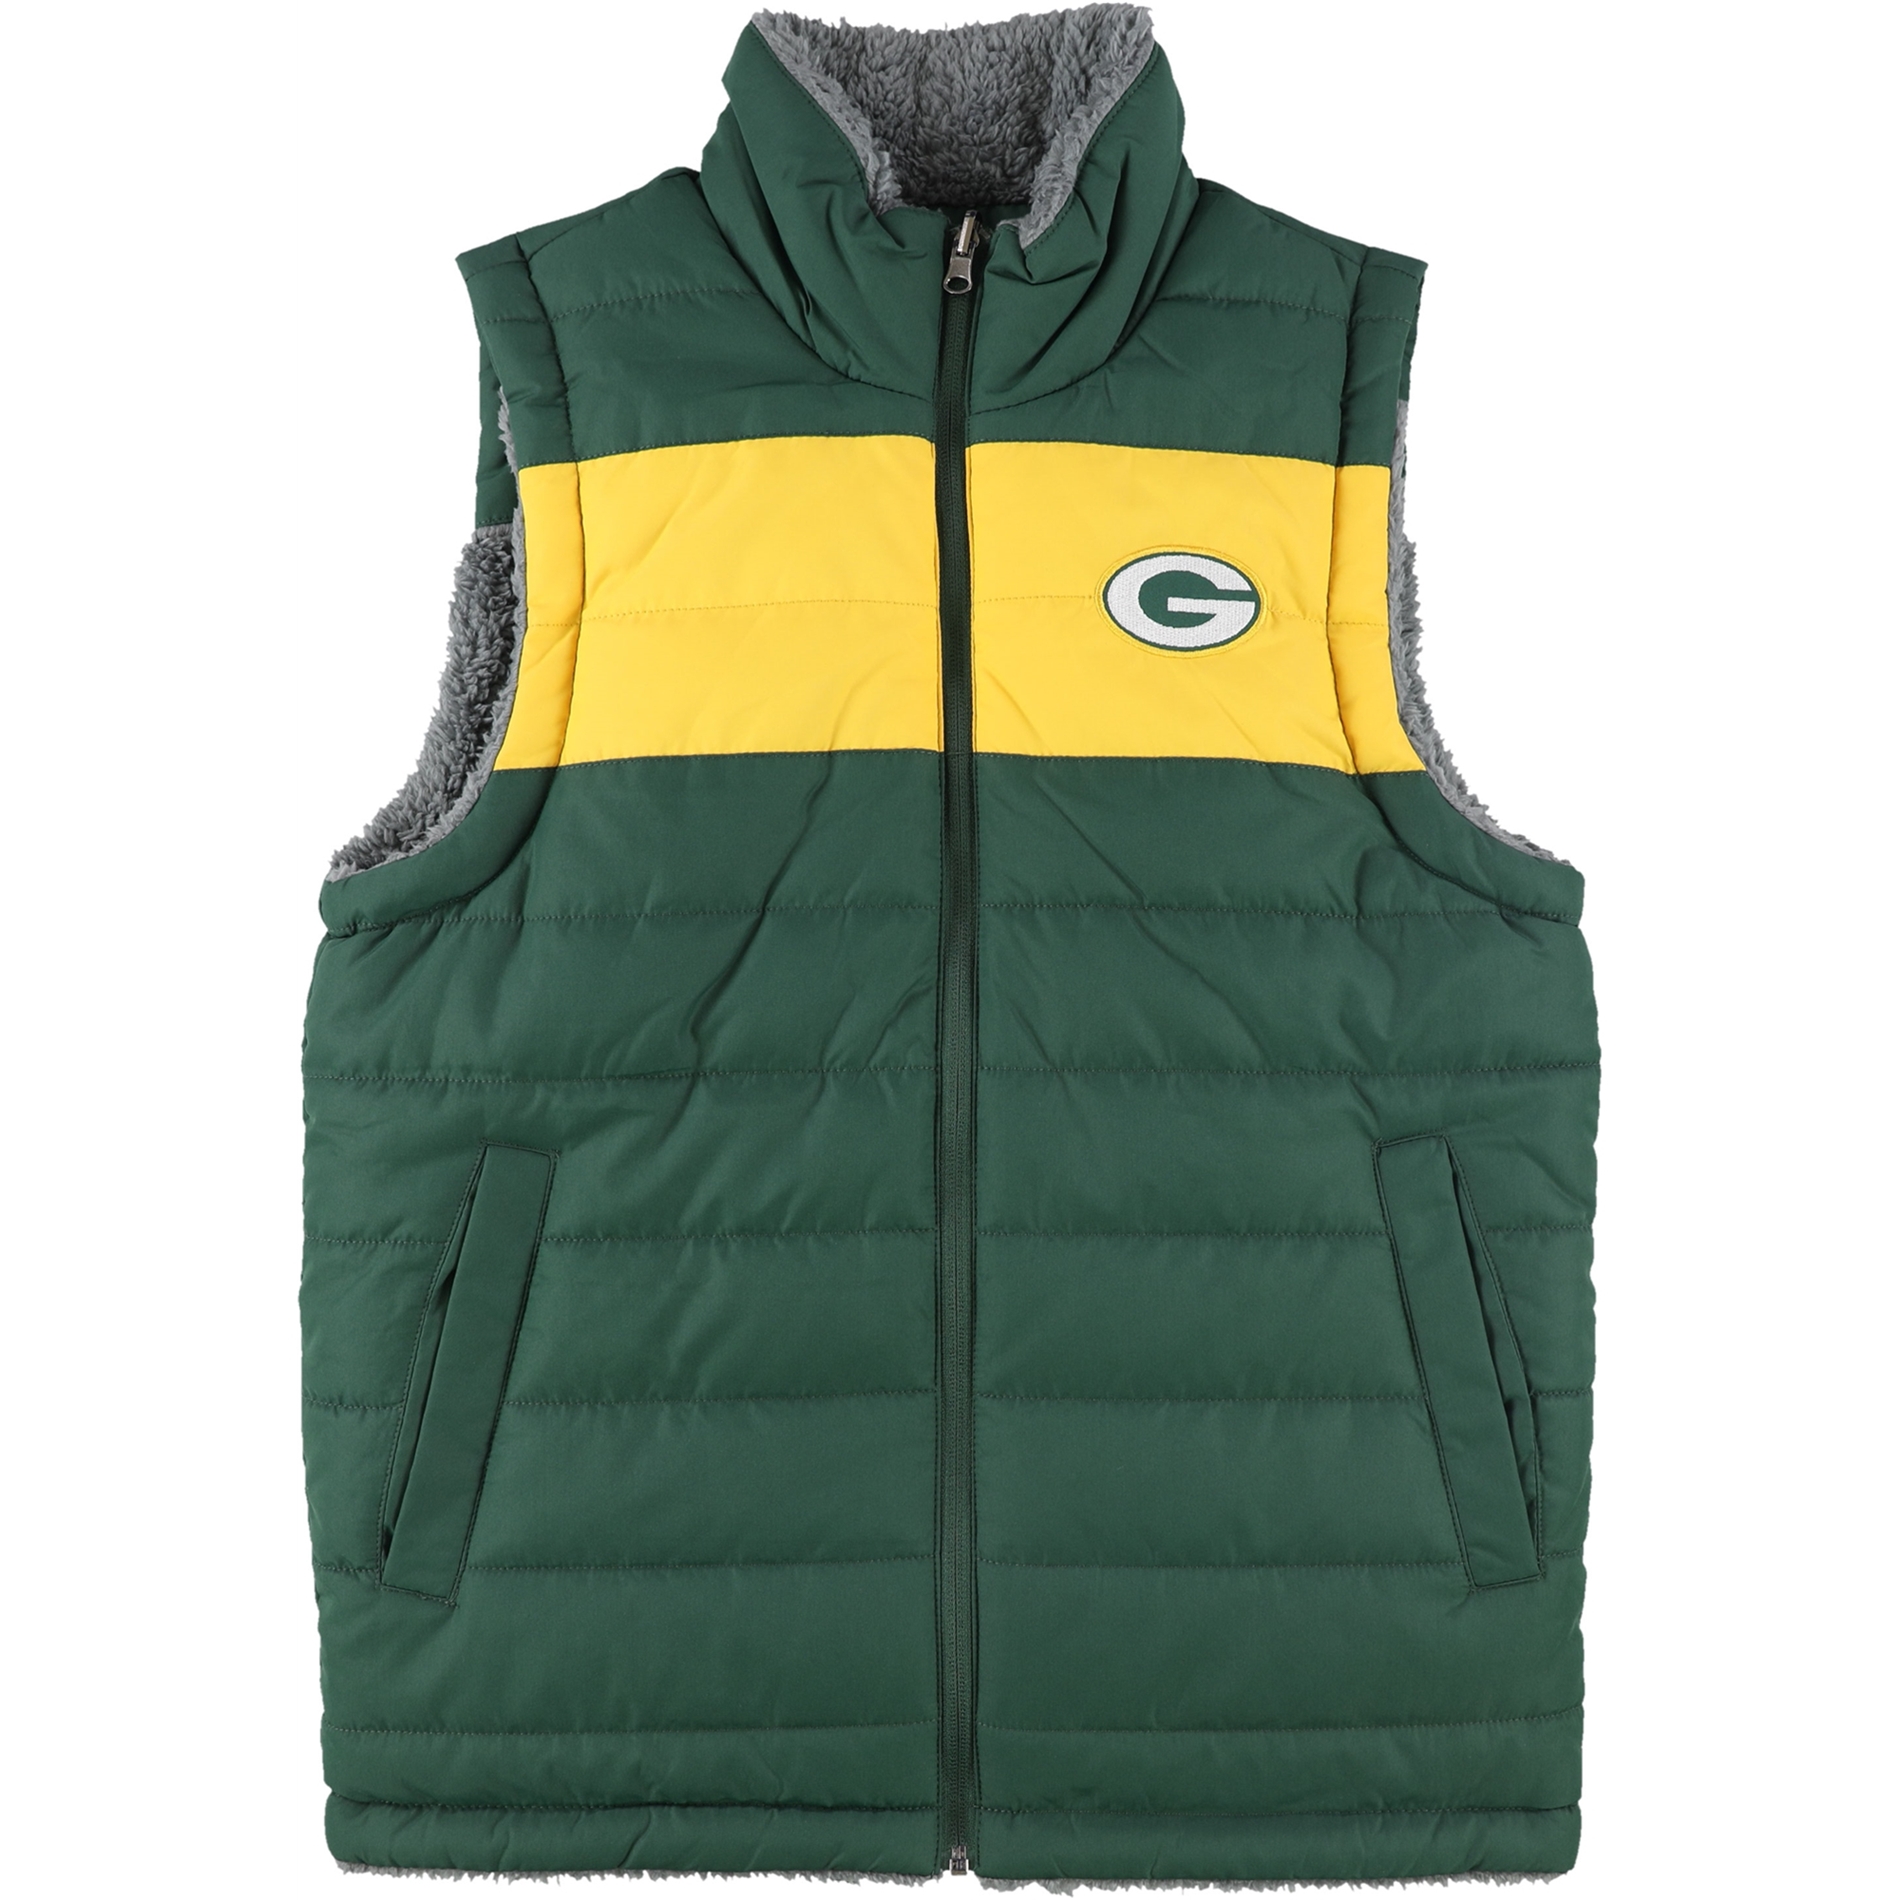 Nfl Mens Packers Reversible Outerwear Vest